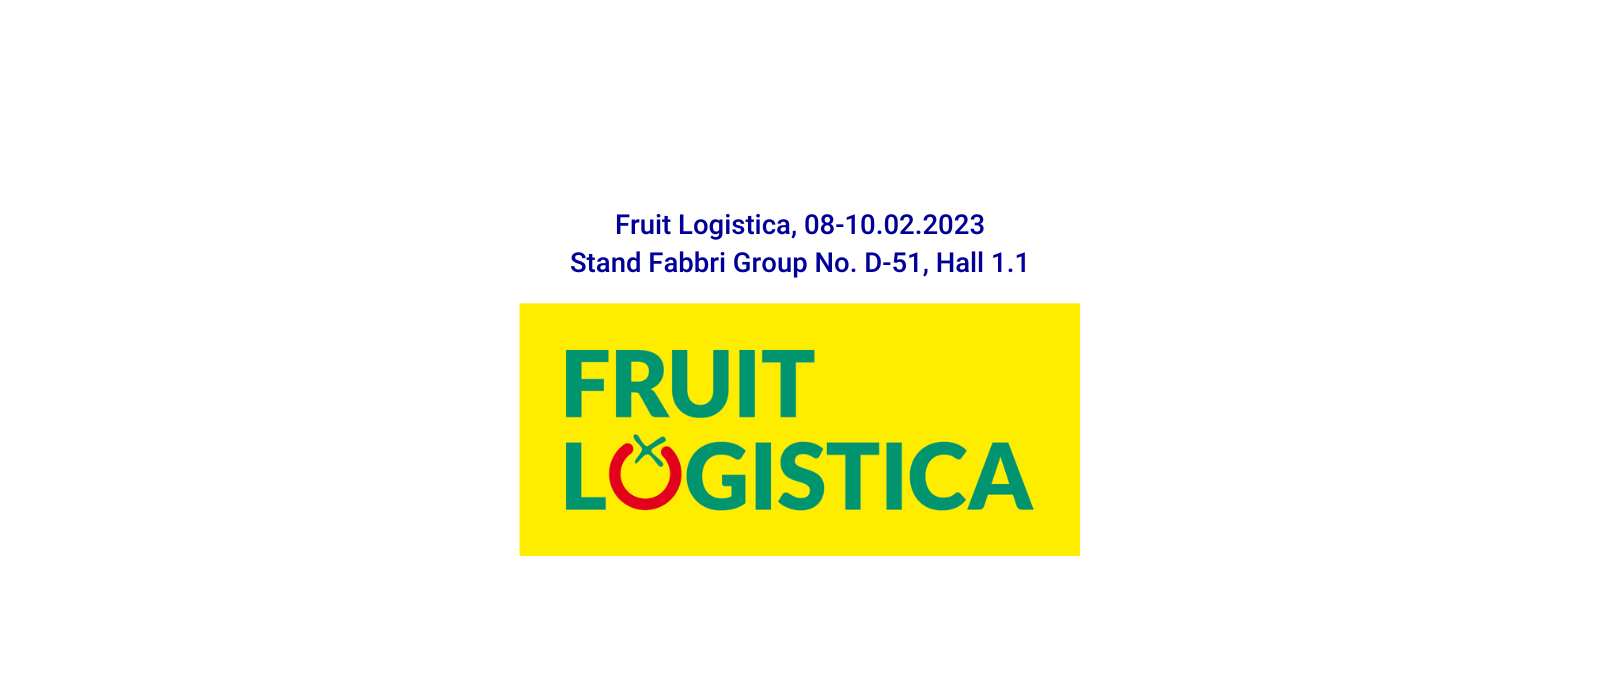 Fabbri Group invites you to Fruit Logistica 2023!